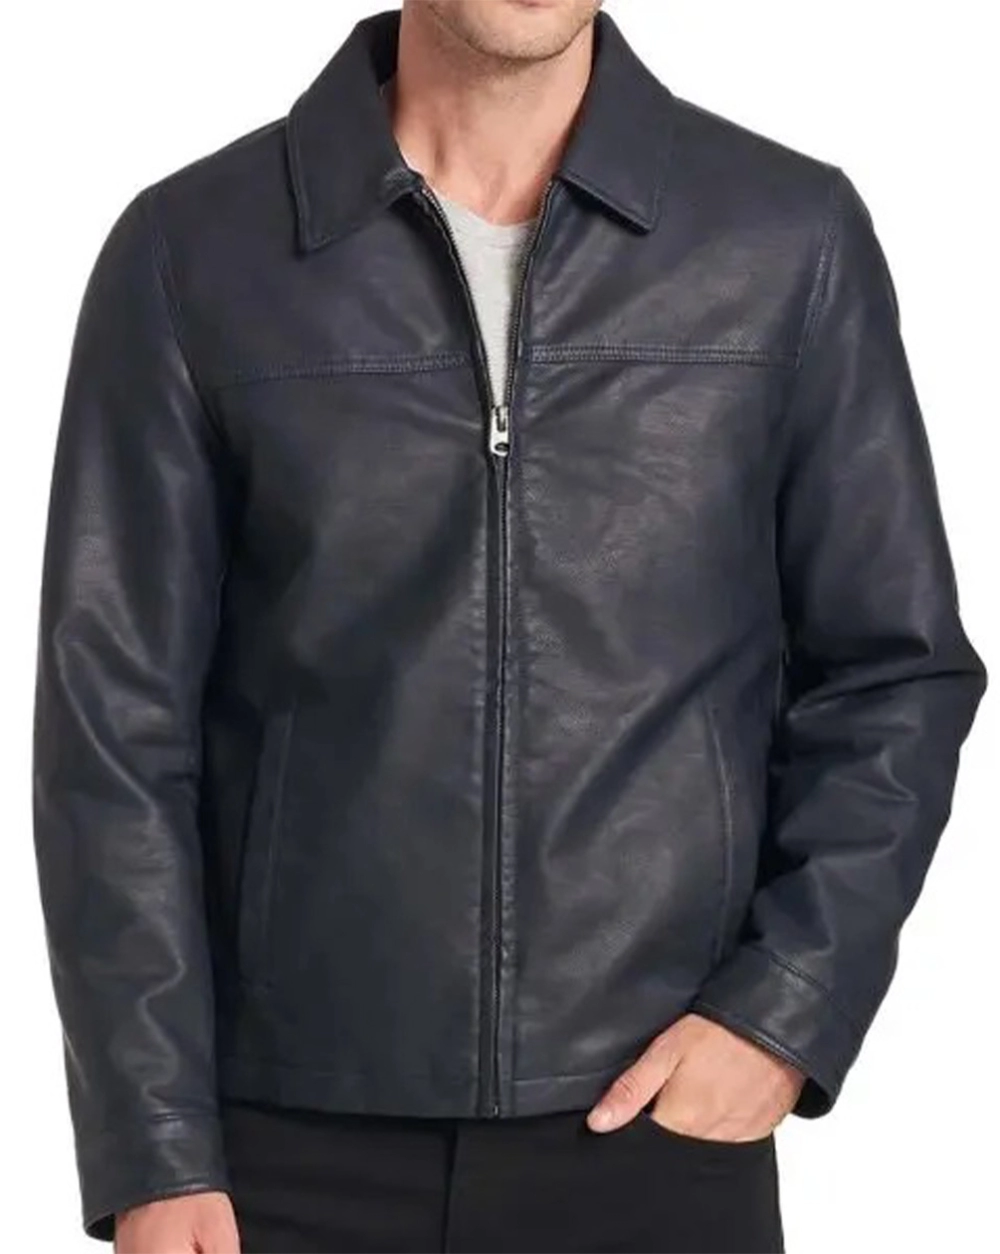 barry-leather Barry Leather Open Bottom Jacket, Open bottom jacket